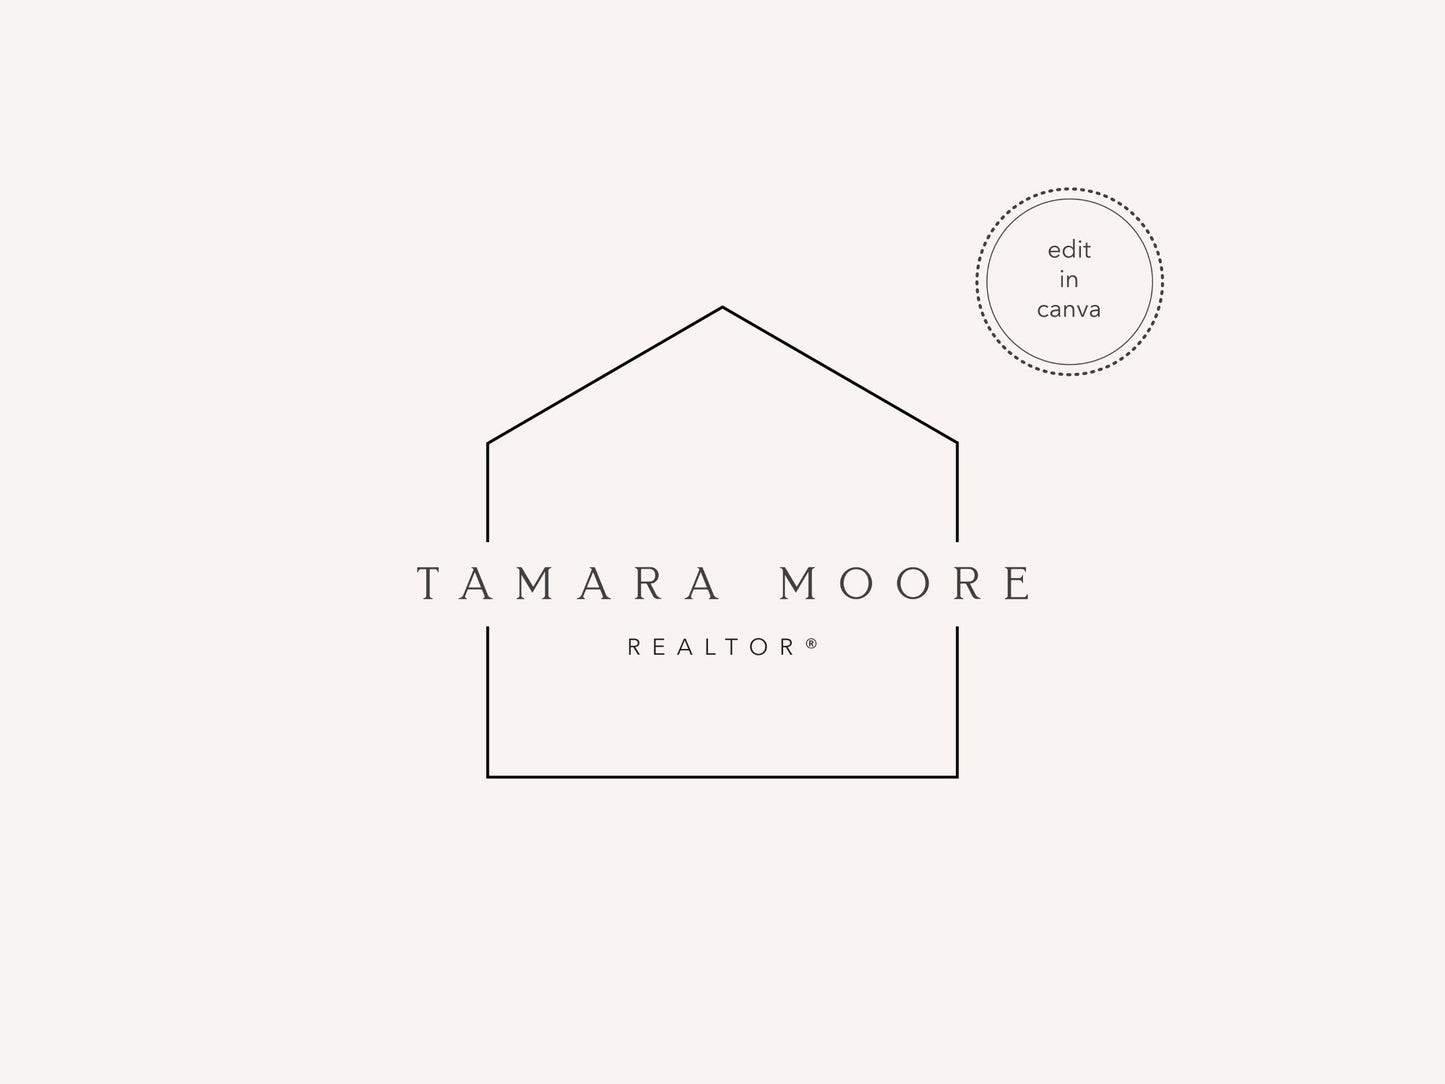 Real Estate Minimal Tamara Moore Logo Template - Clean and modern logo design featuring Tamara Moore, ideal for real estate professionals seeking a minimalistic yet impactful visual identity.